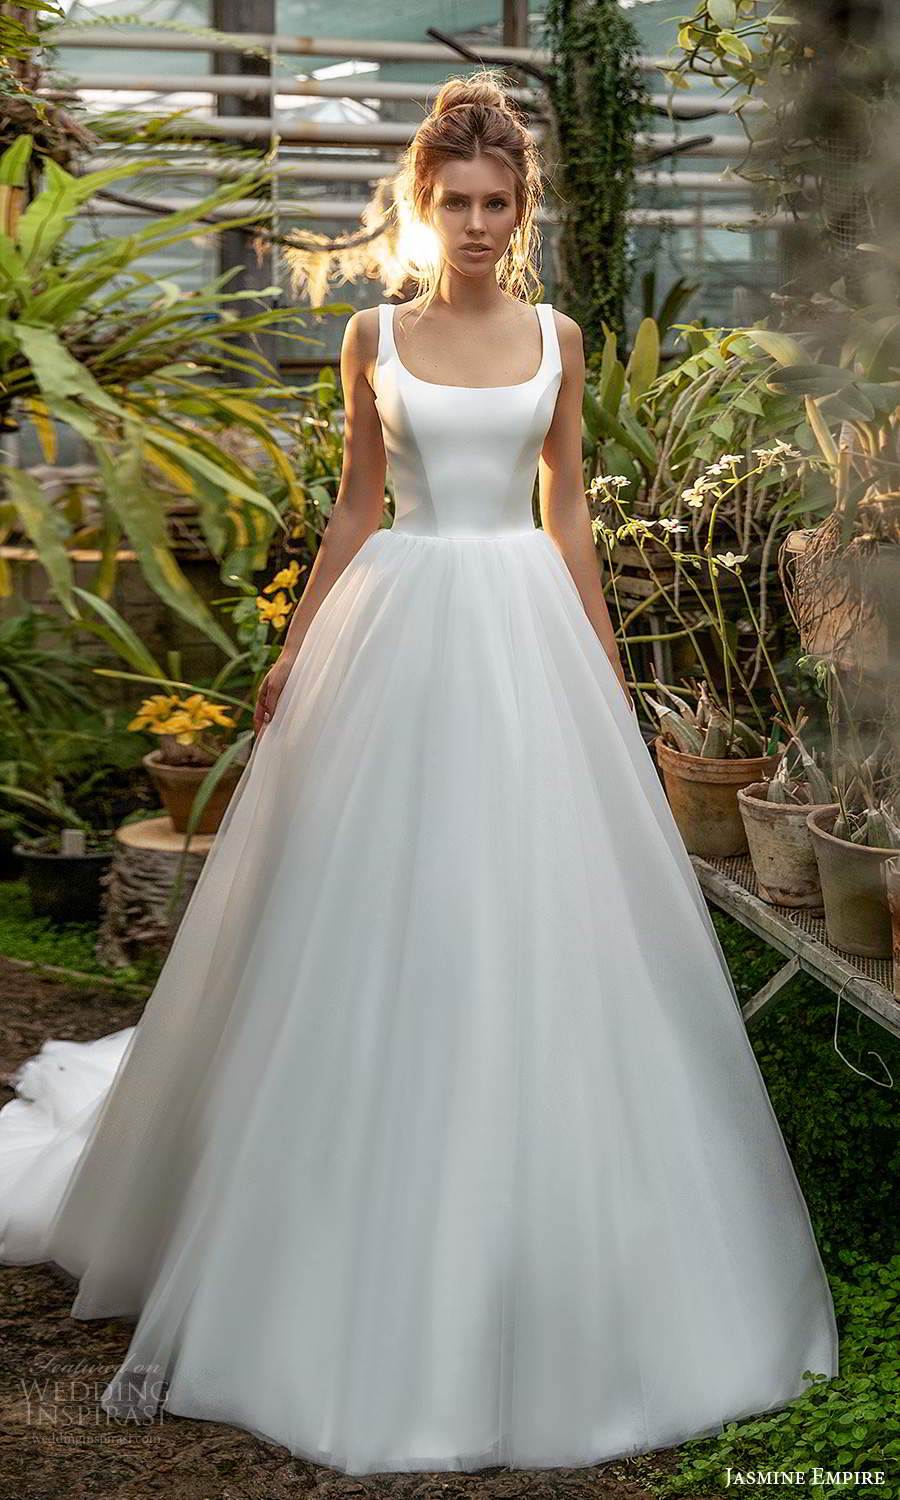 jasmine empire 2021 bridal sleeveless strap square neckline clean a line blal gown wedding dress chapel train (18) mv